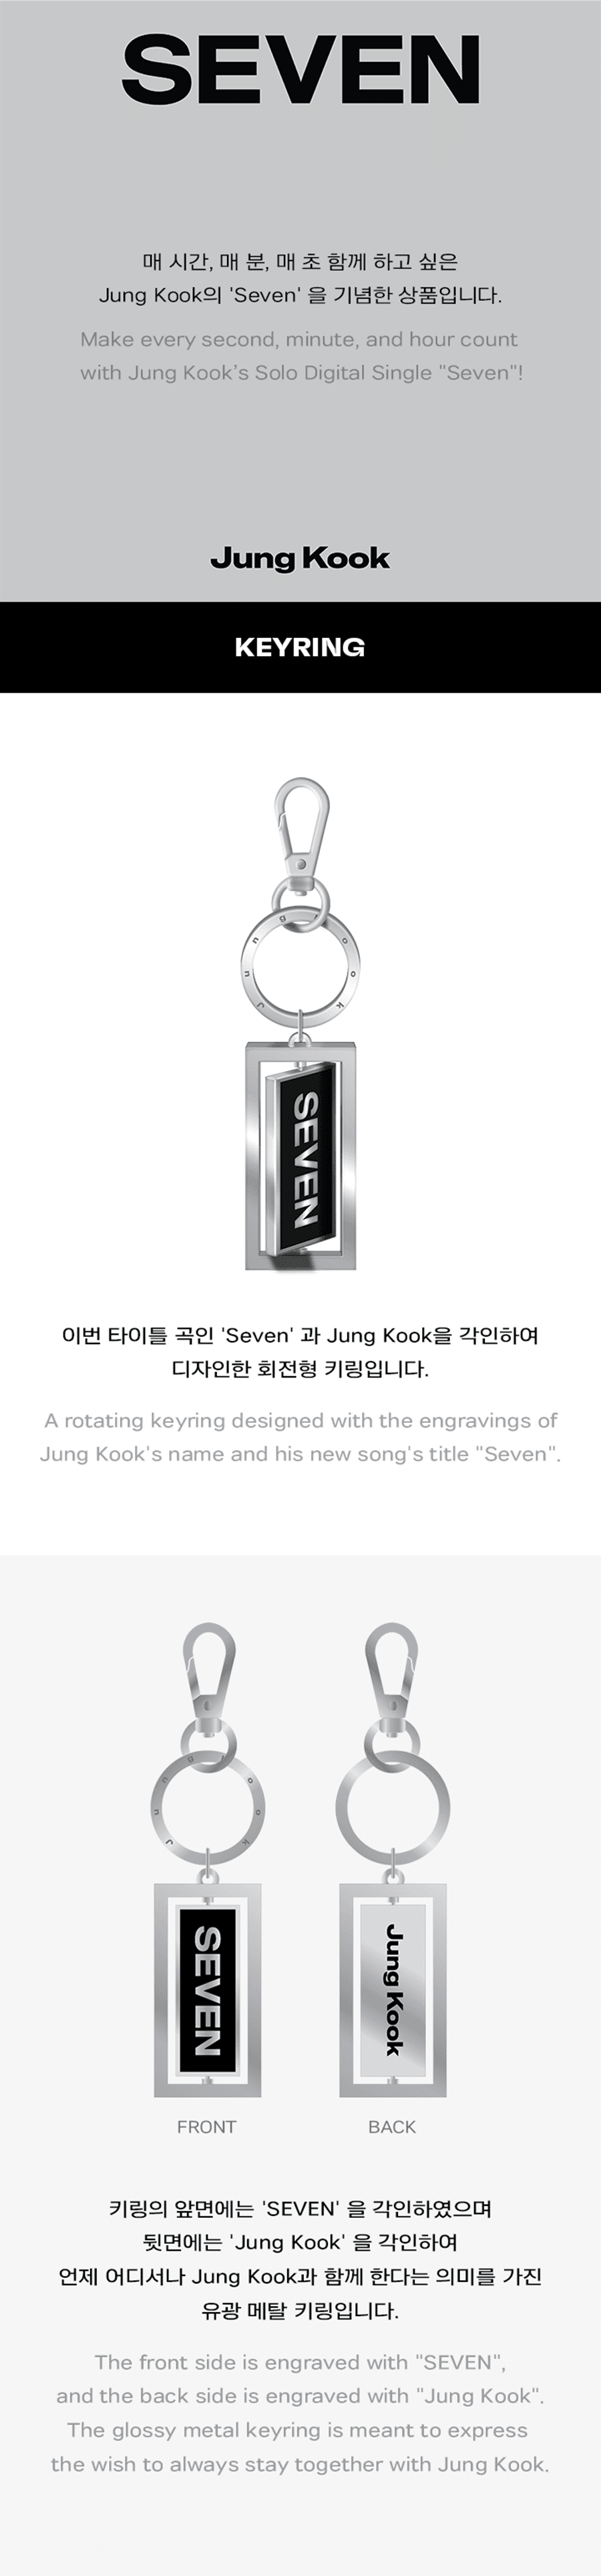 Jungkook (BTS) Official Seven Keyring